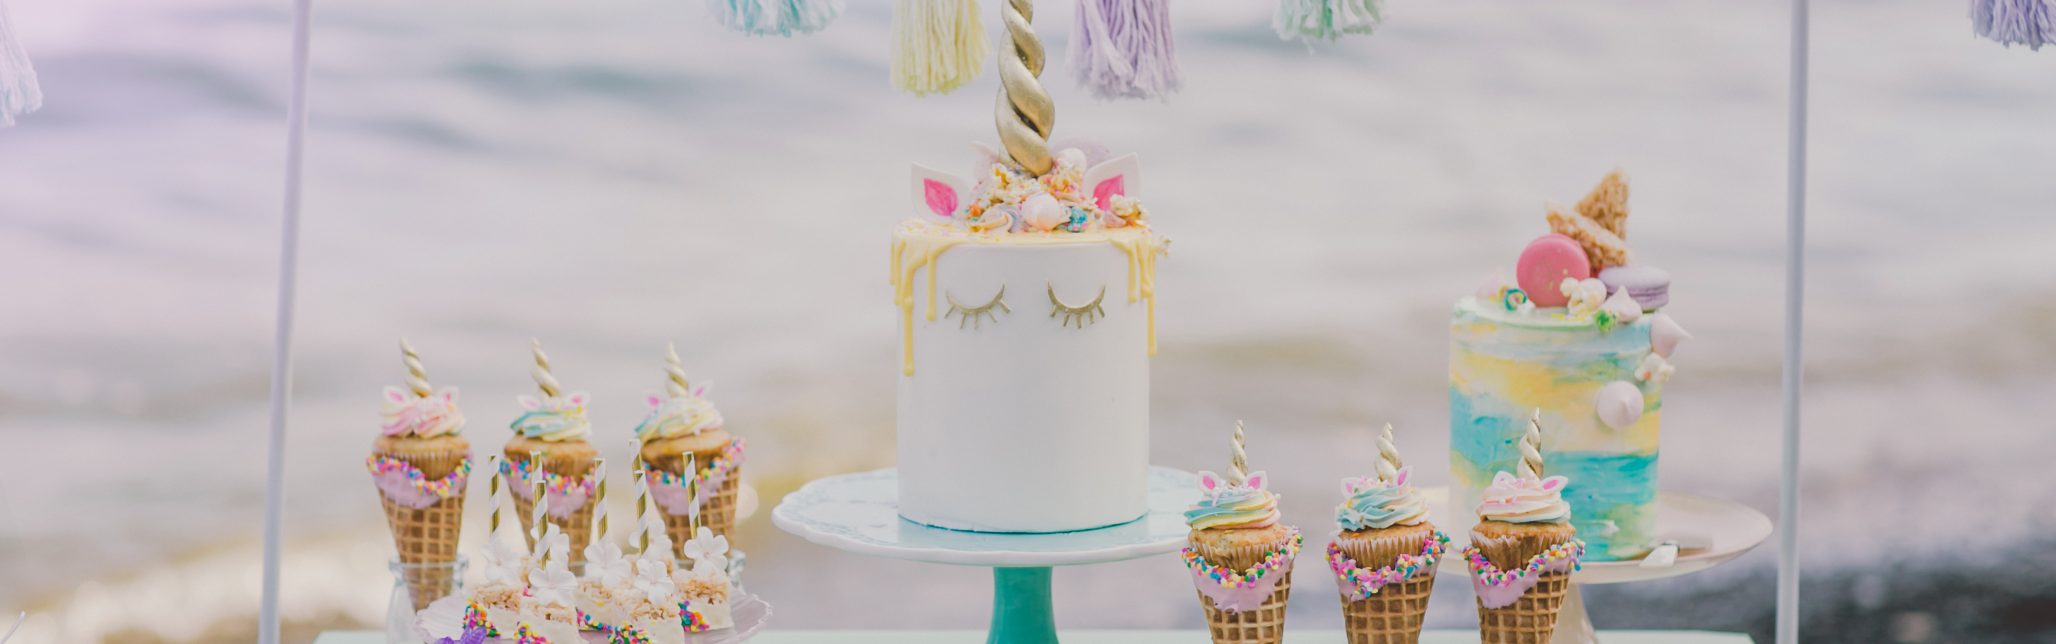 unicorn cake and desserts on green dresser